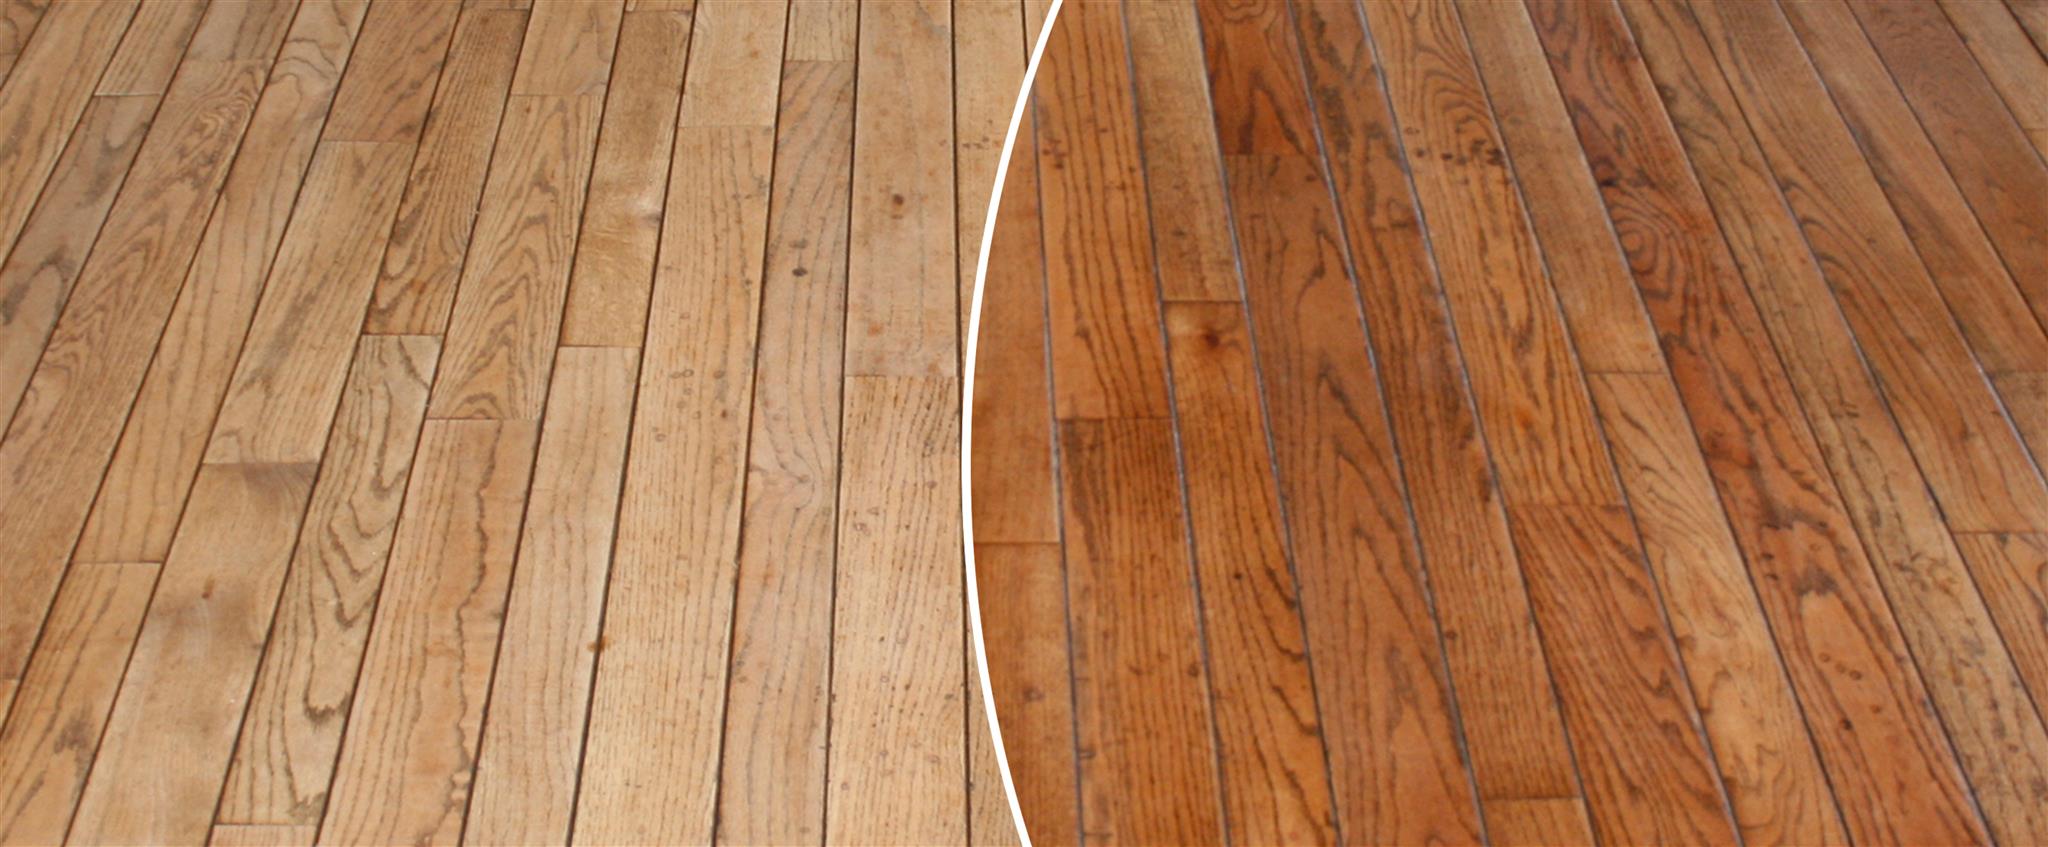 Wood Floor Refinishing Services N Hance, Hardwood Floor Repair Columbia Sc